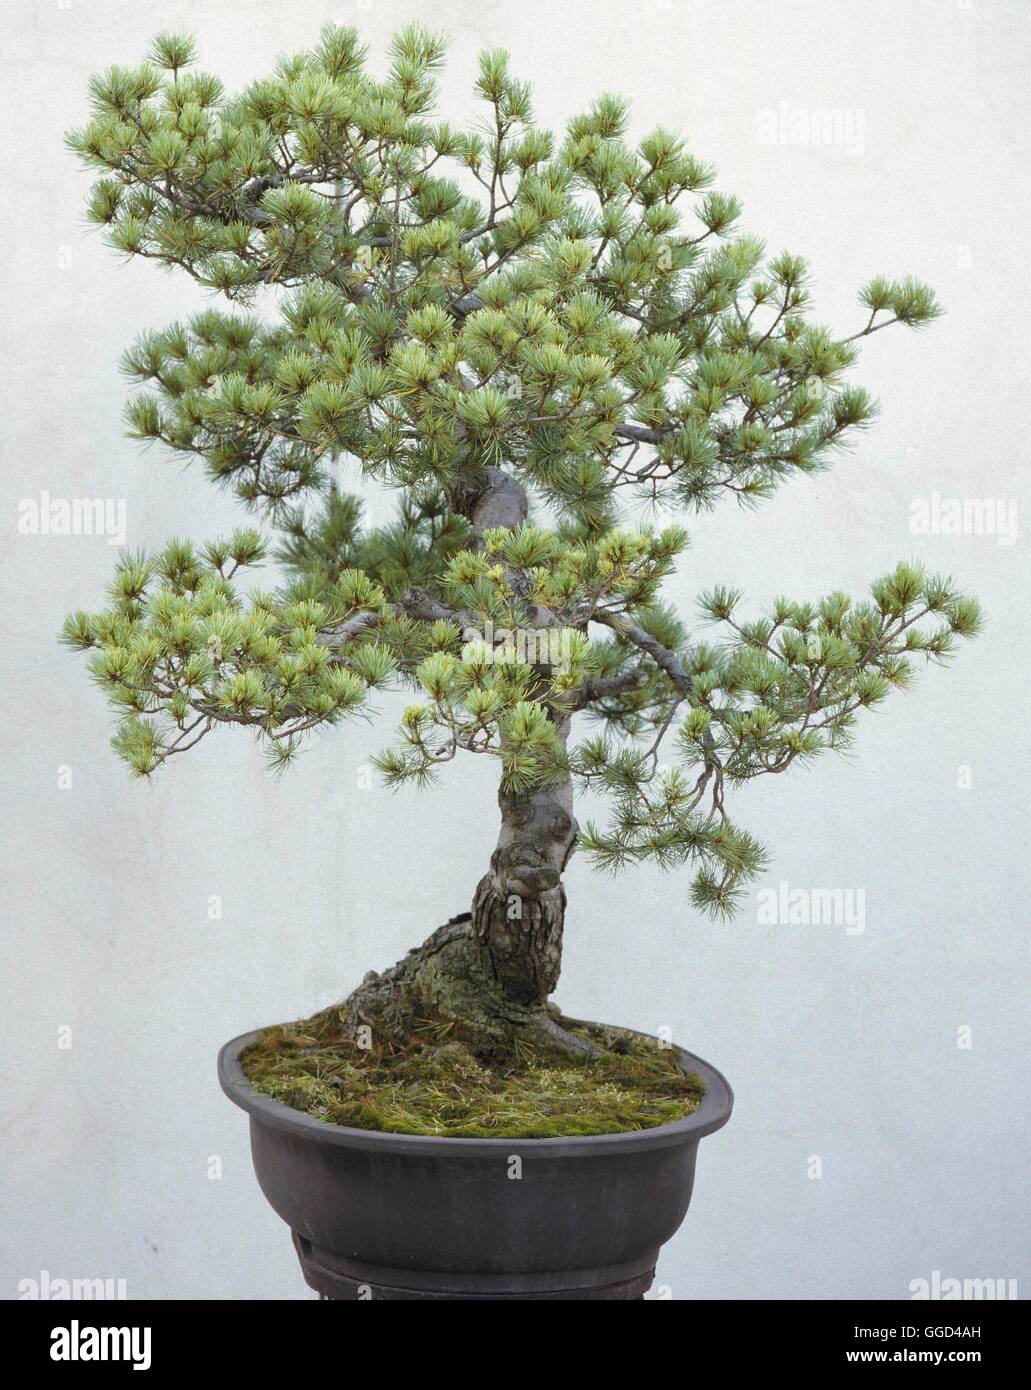 Bonsai - Pinus parviflora - (Please Credit: Photos Hort/ Salmsbury Bonsai)   BON011751     Photos Ho Stock Photo